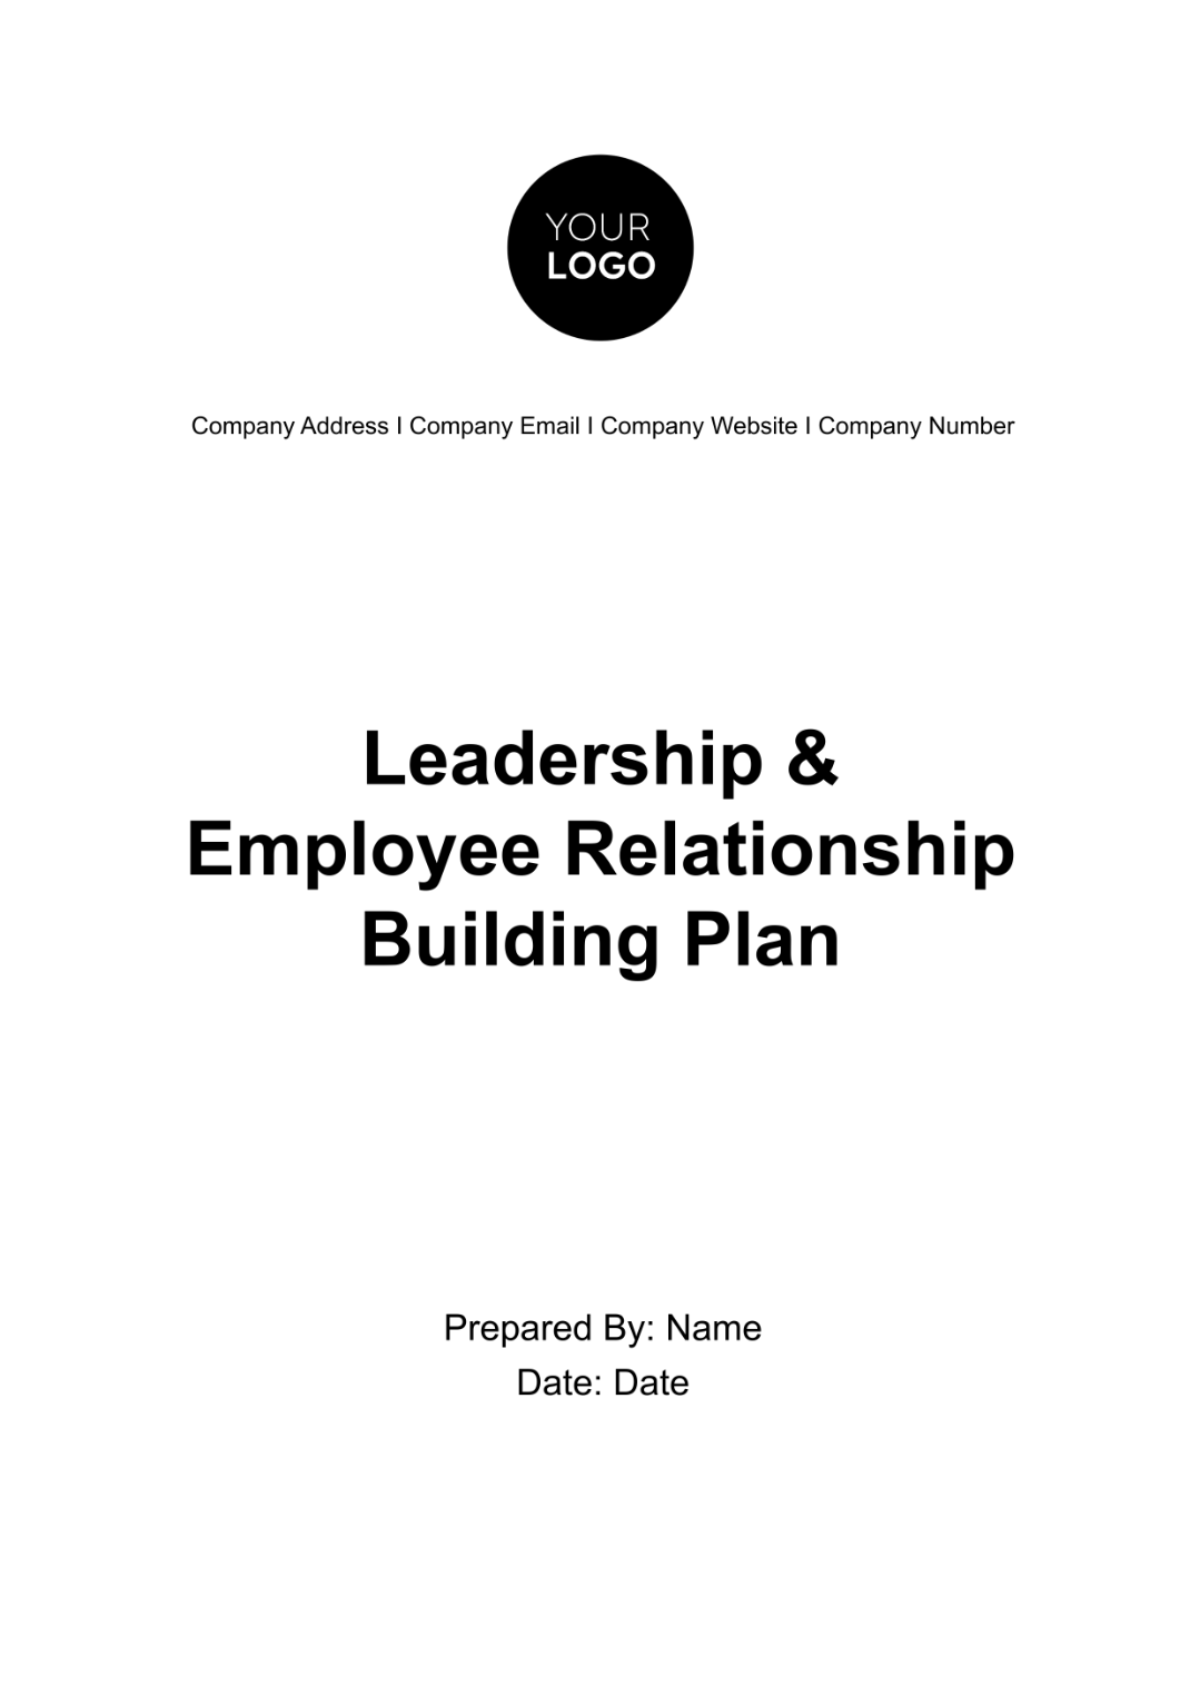 Leadership & Employee Relationship Building Plan HR Template